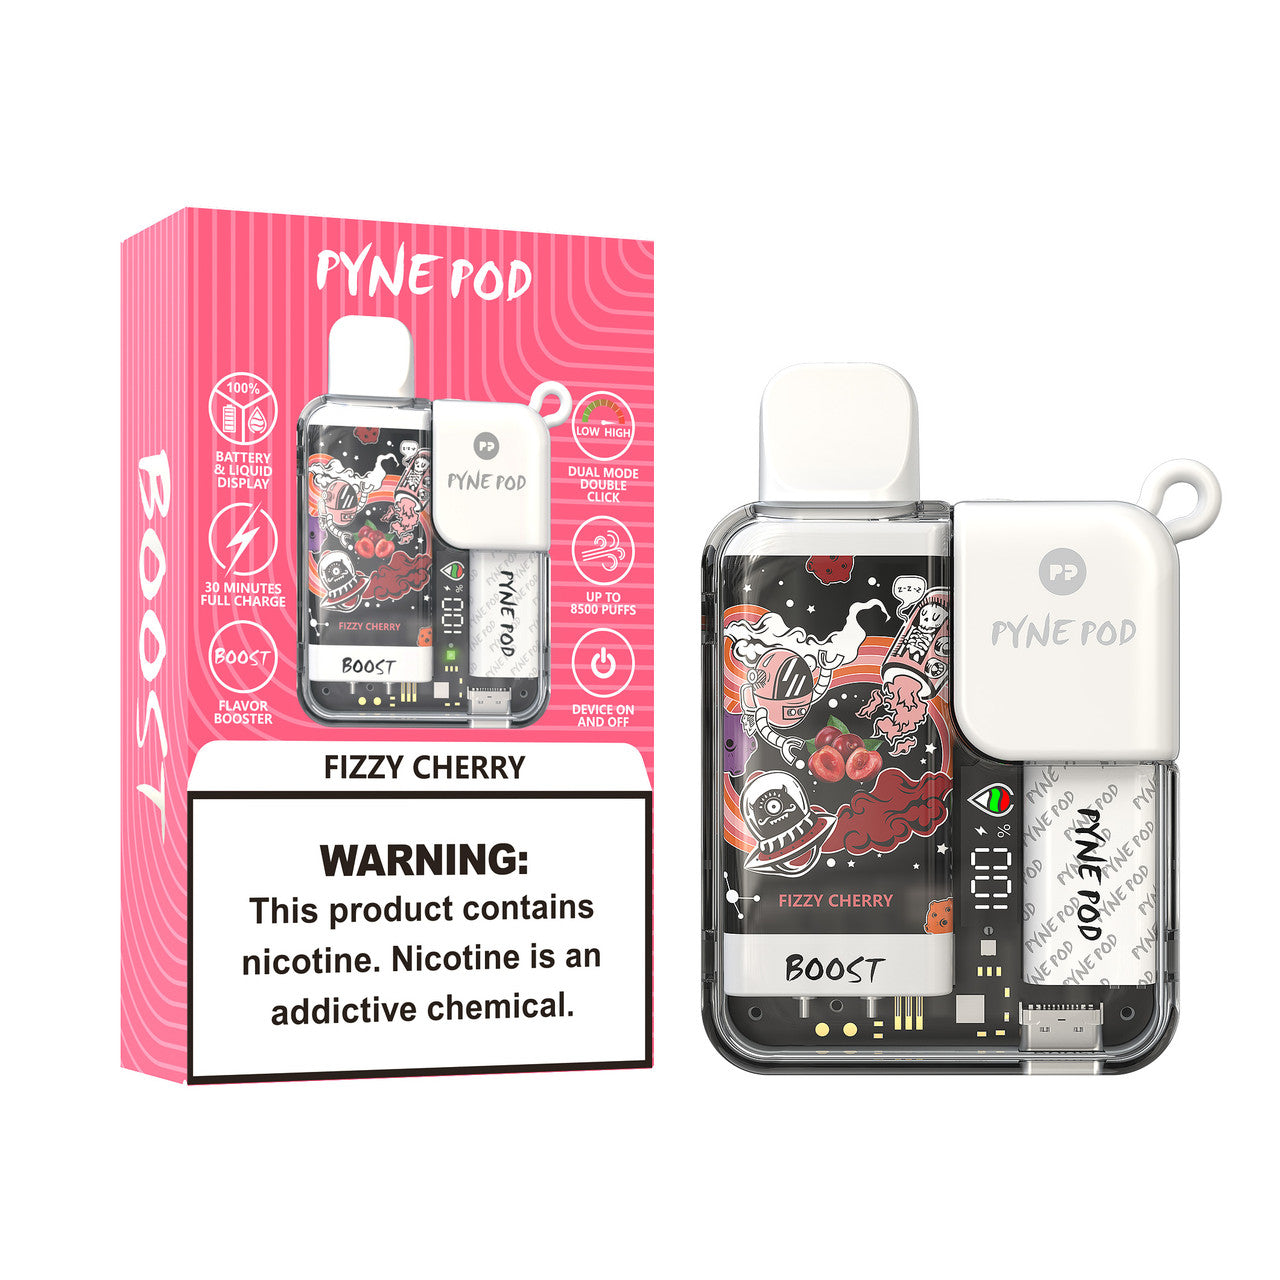 Pyne-Pod-Boost-8500-Fizzy-Cherry-2-1280x1280-JPG